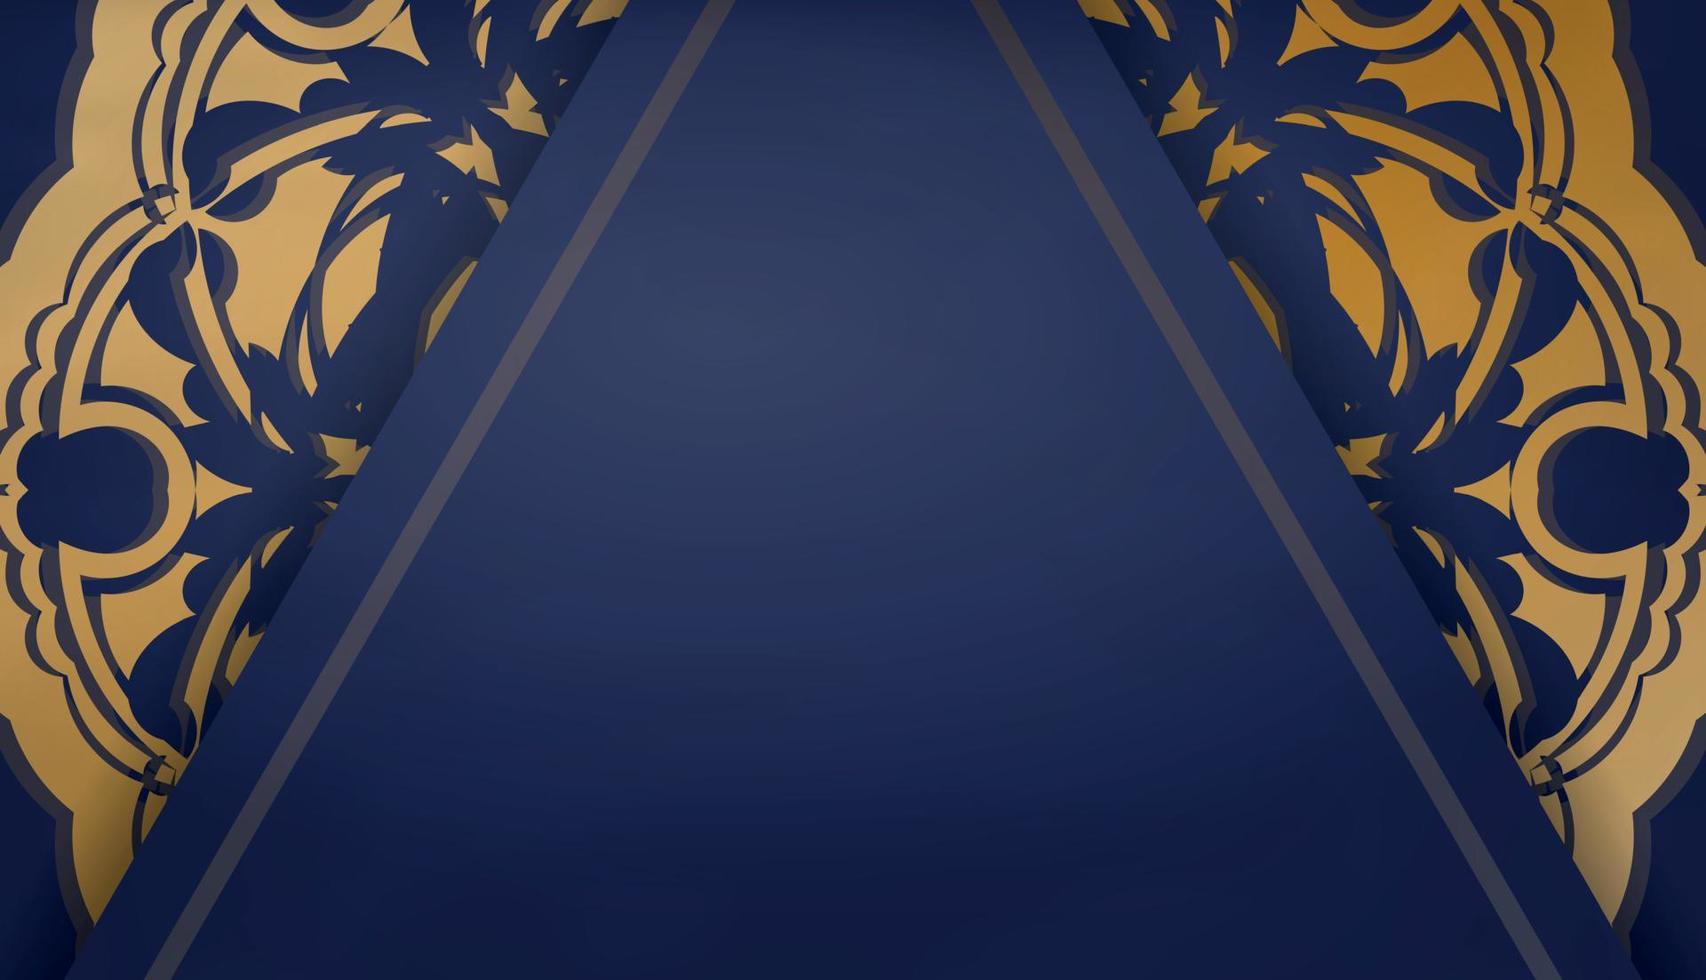 Dark blue banner with vintage gold ornament for design under logo or text vector